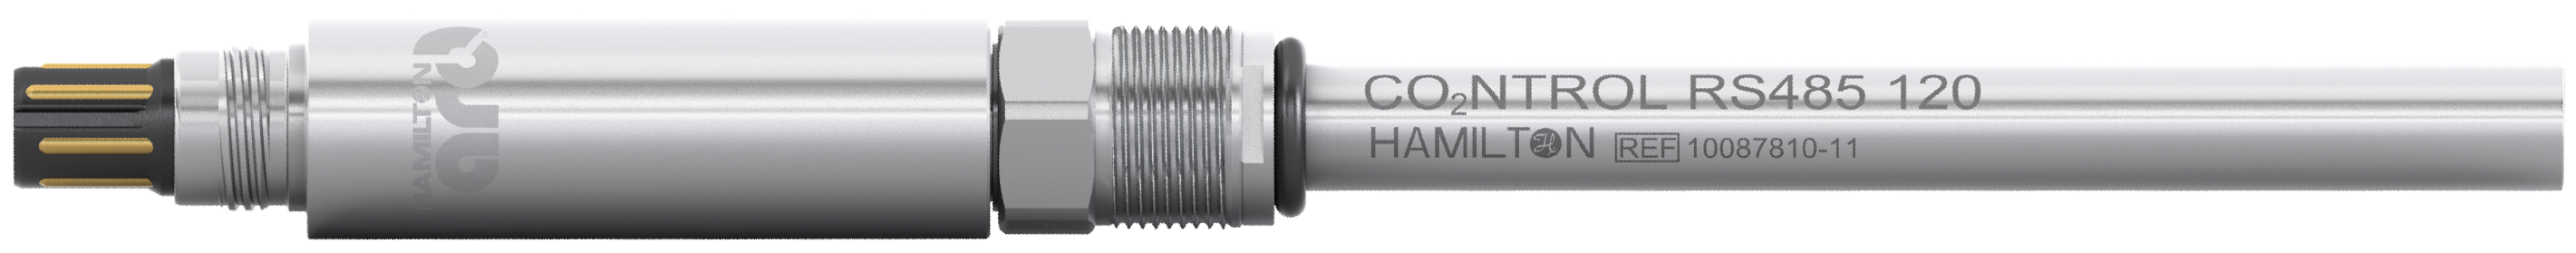 Hamilton CO2NTROL RS485 Dissolved Carbon Dioxide Sensor | ハミルトン DCO2センサー 溶存二酸化炭素センサー